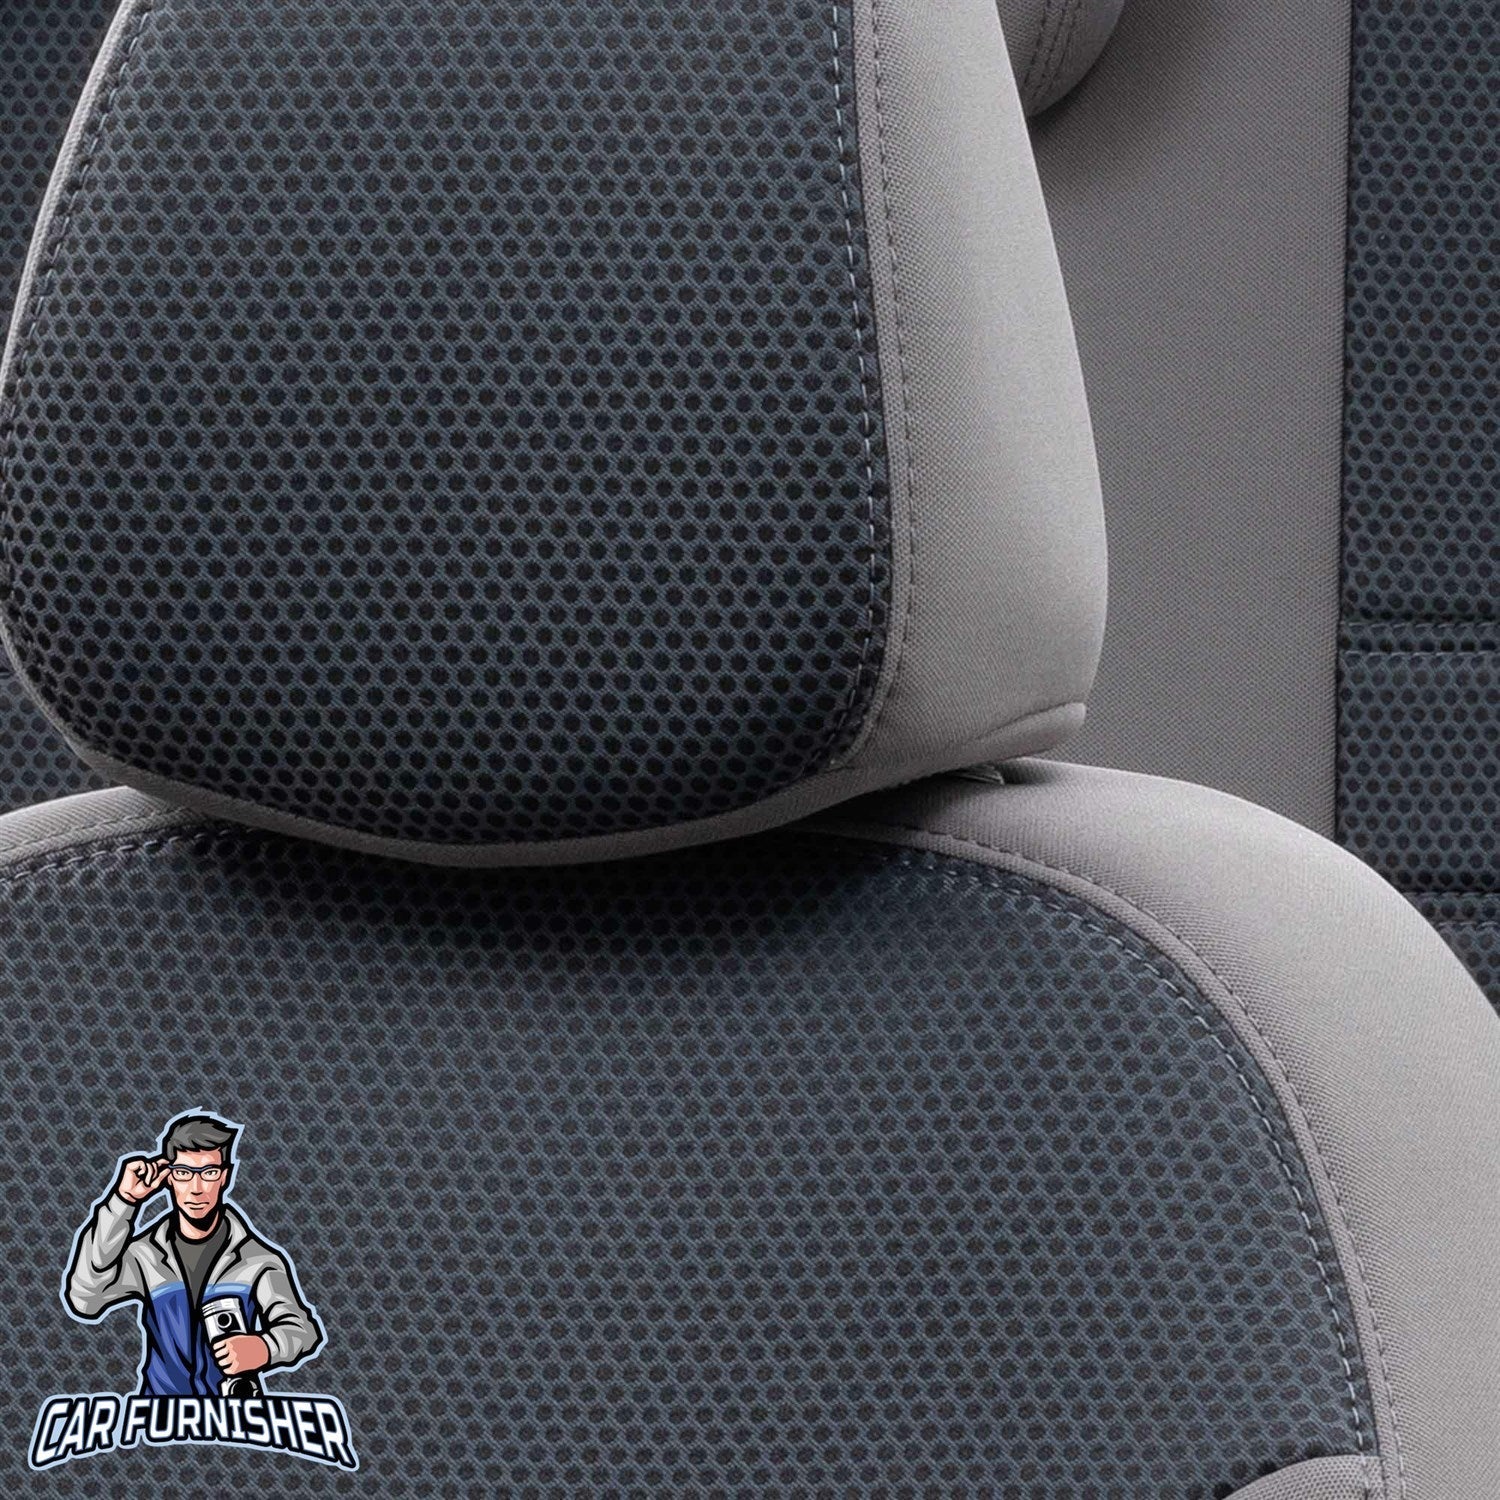 Peugeot Rifter Seat Covers Original Jacquard Design Smoked Jacquard Fabric